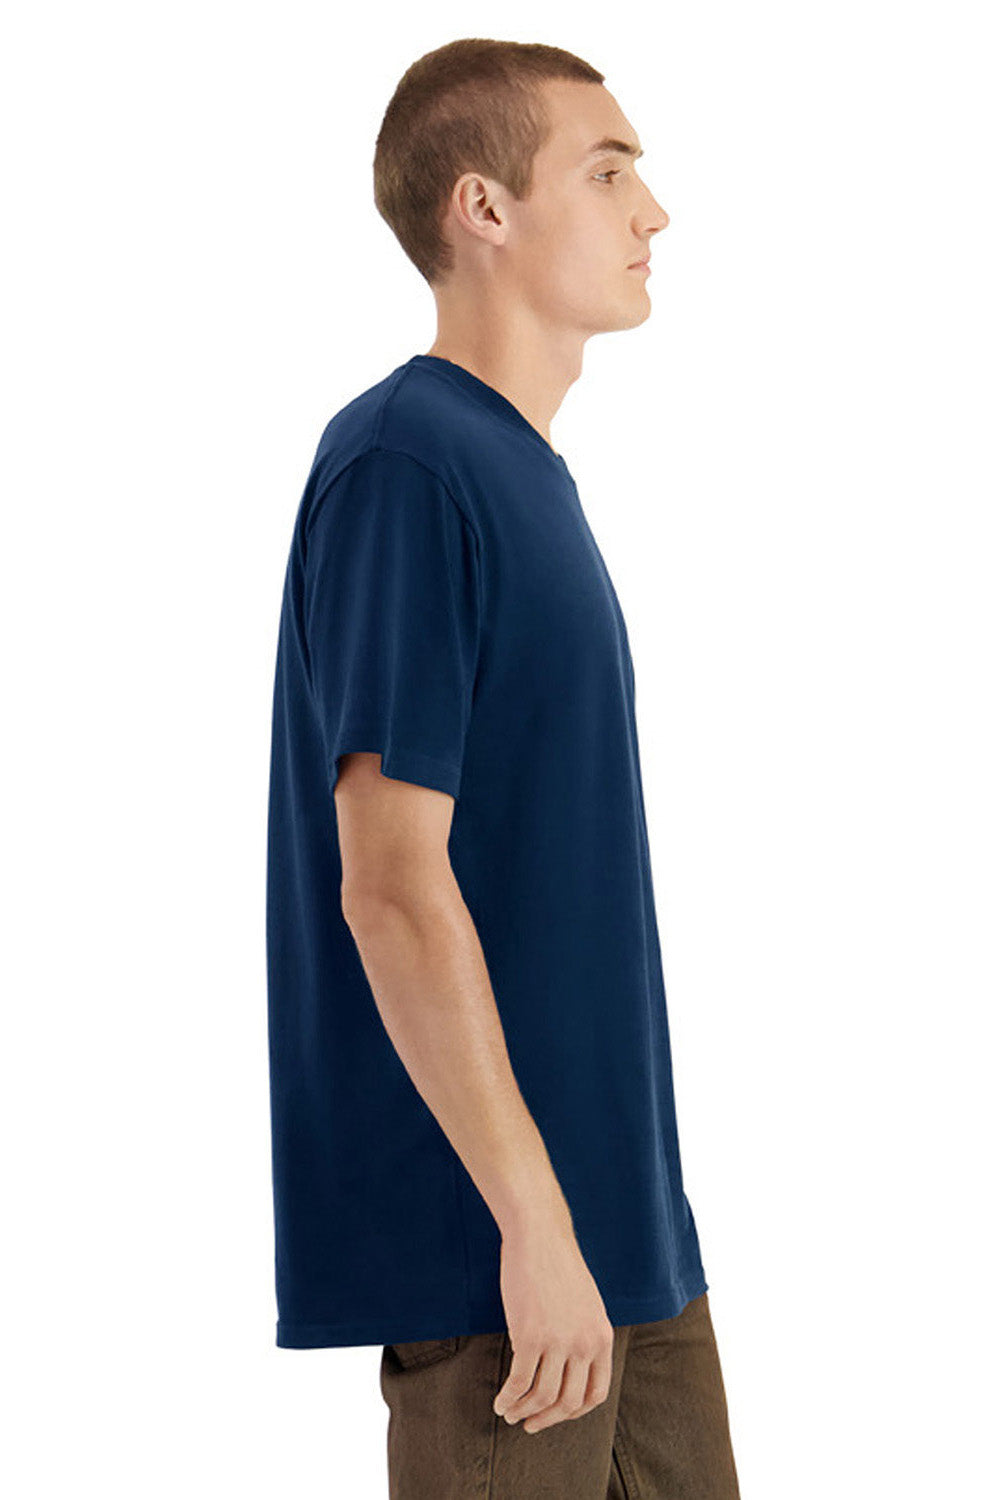 American Apparel 5389 Mens Sueded Cloud Short Sleeve Crewneck T-Shirt Sueded Navy Model Side